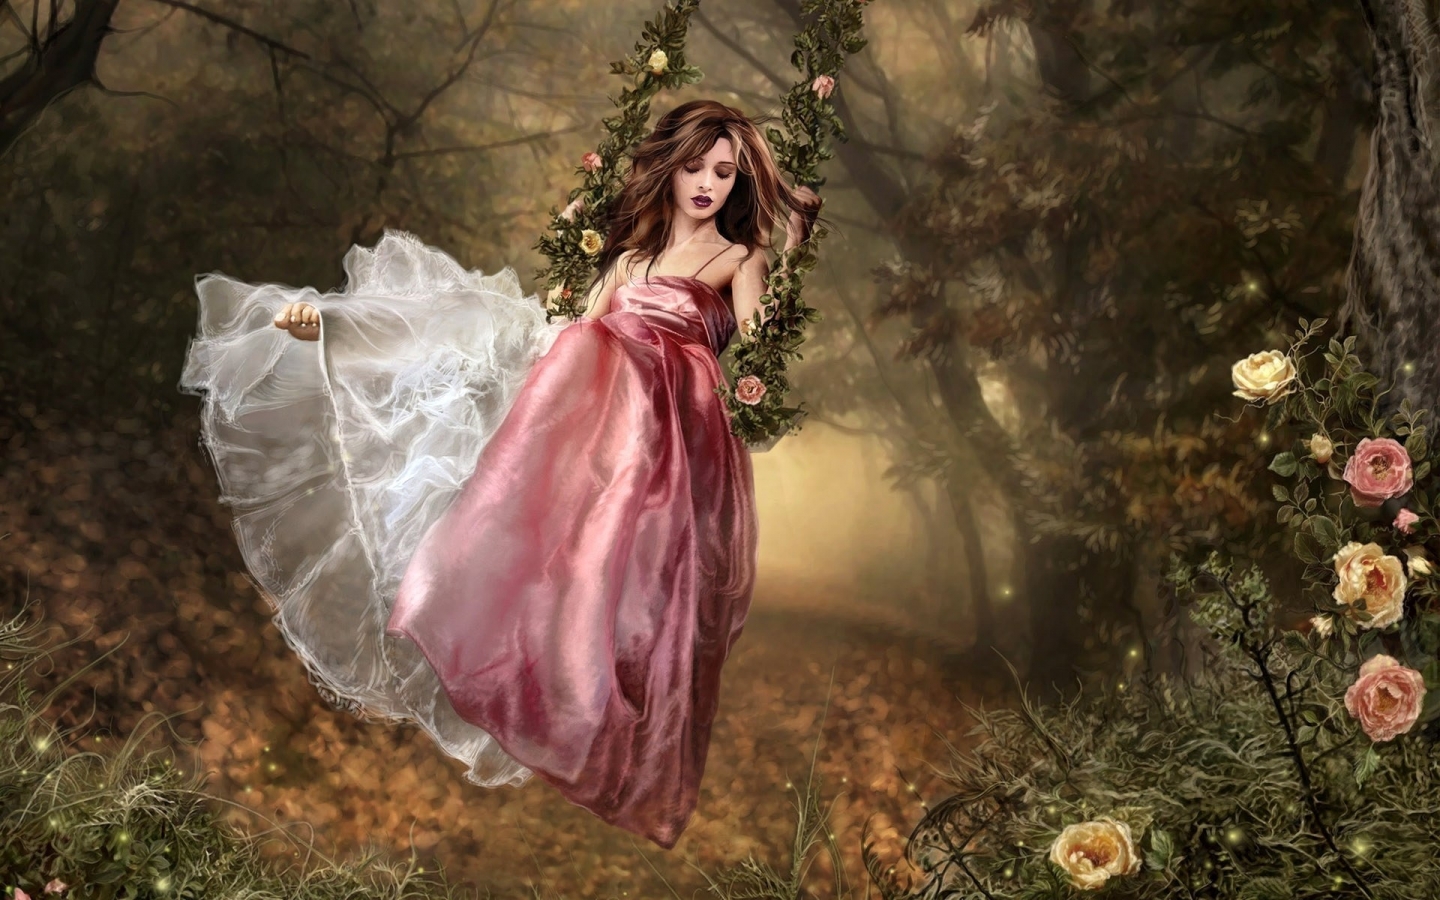 Fantasy Girl Swing for 1440 x 900 widescreen resolution